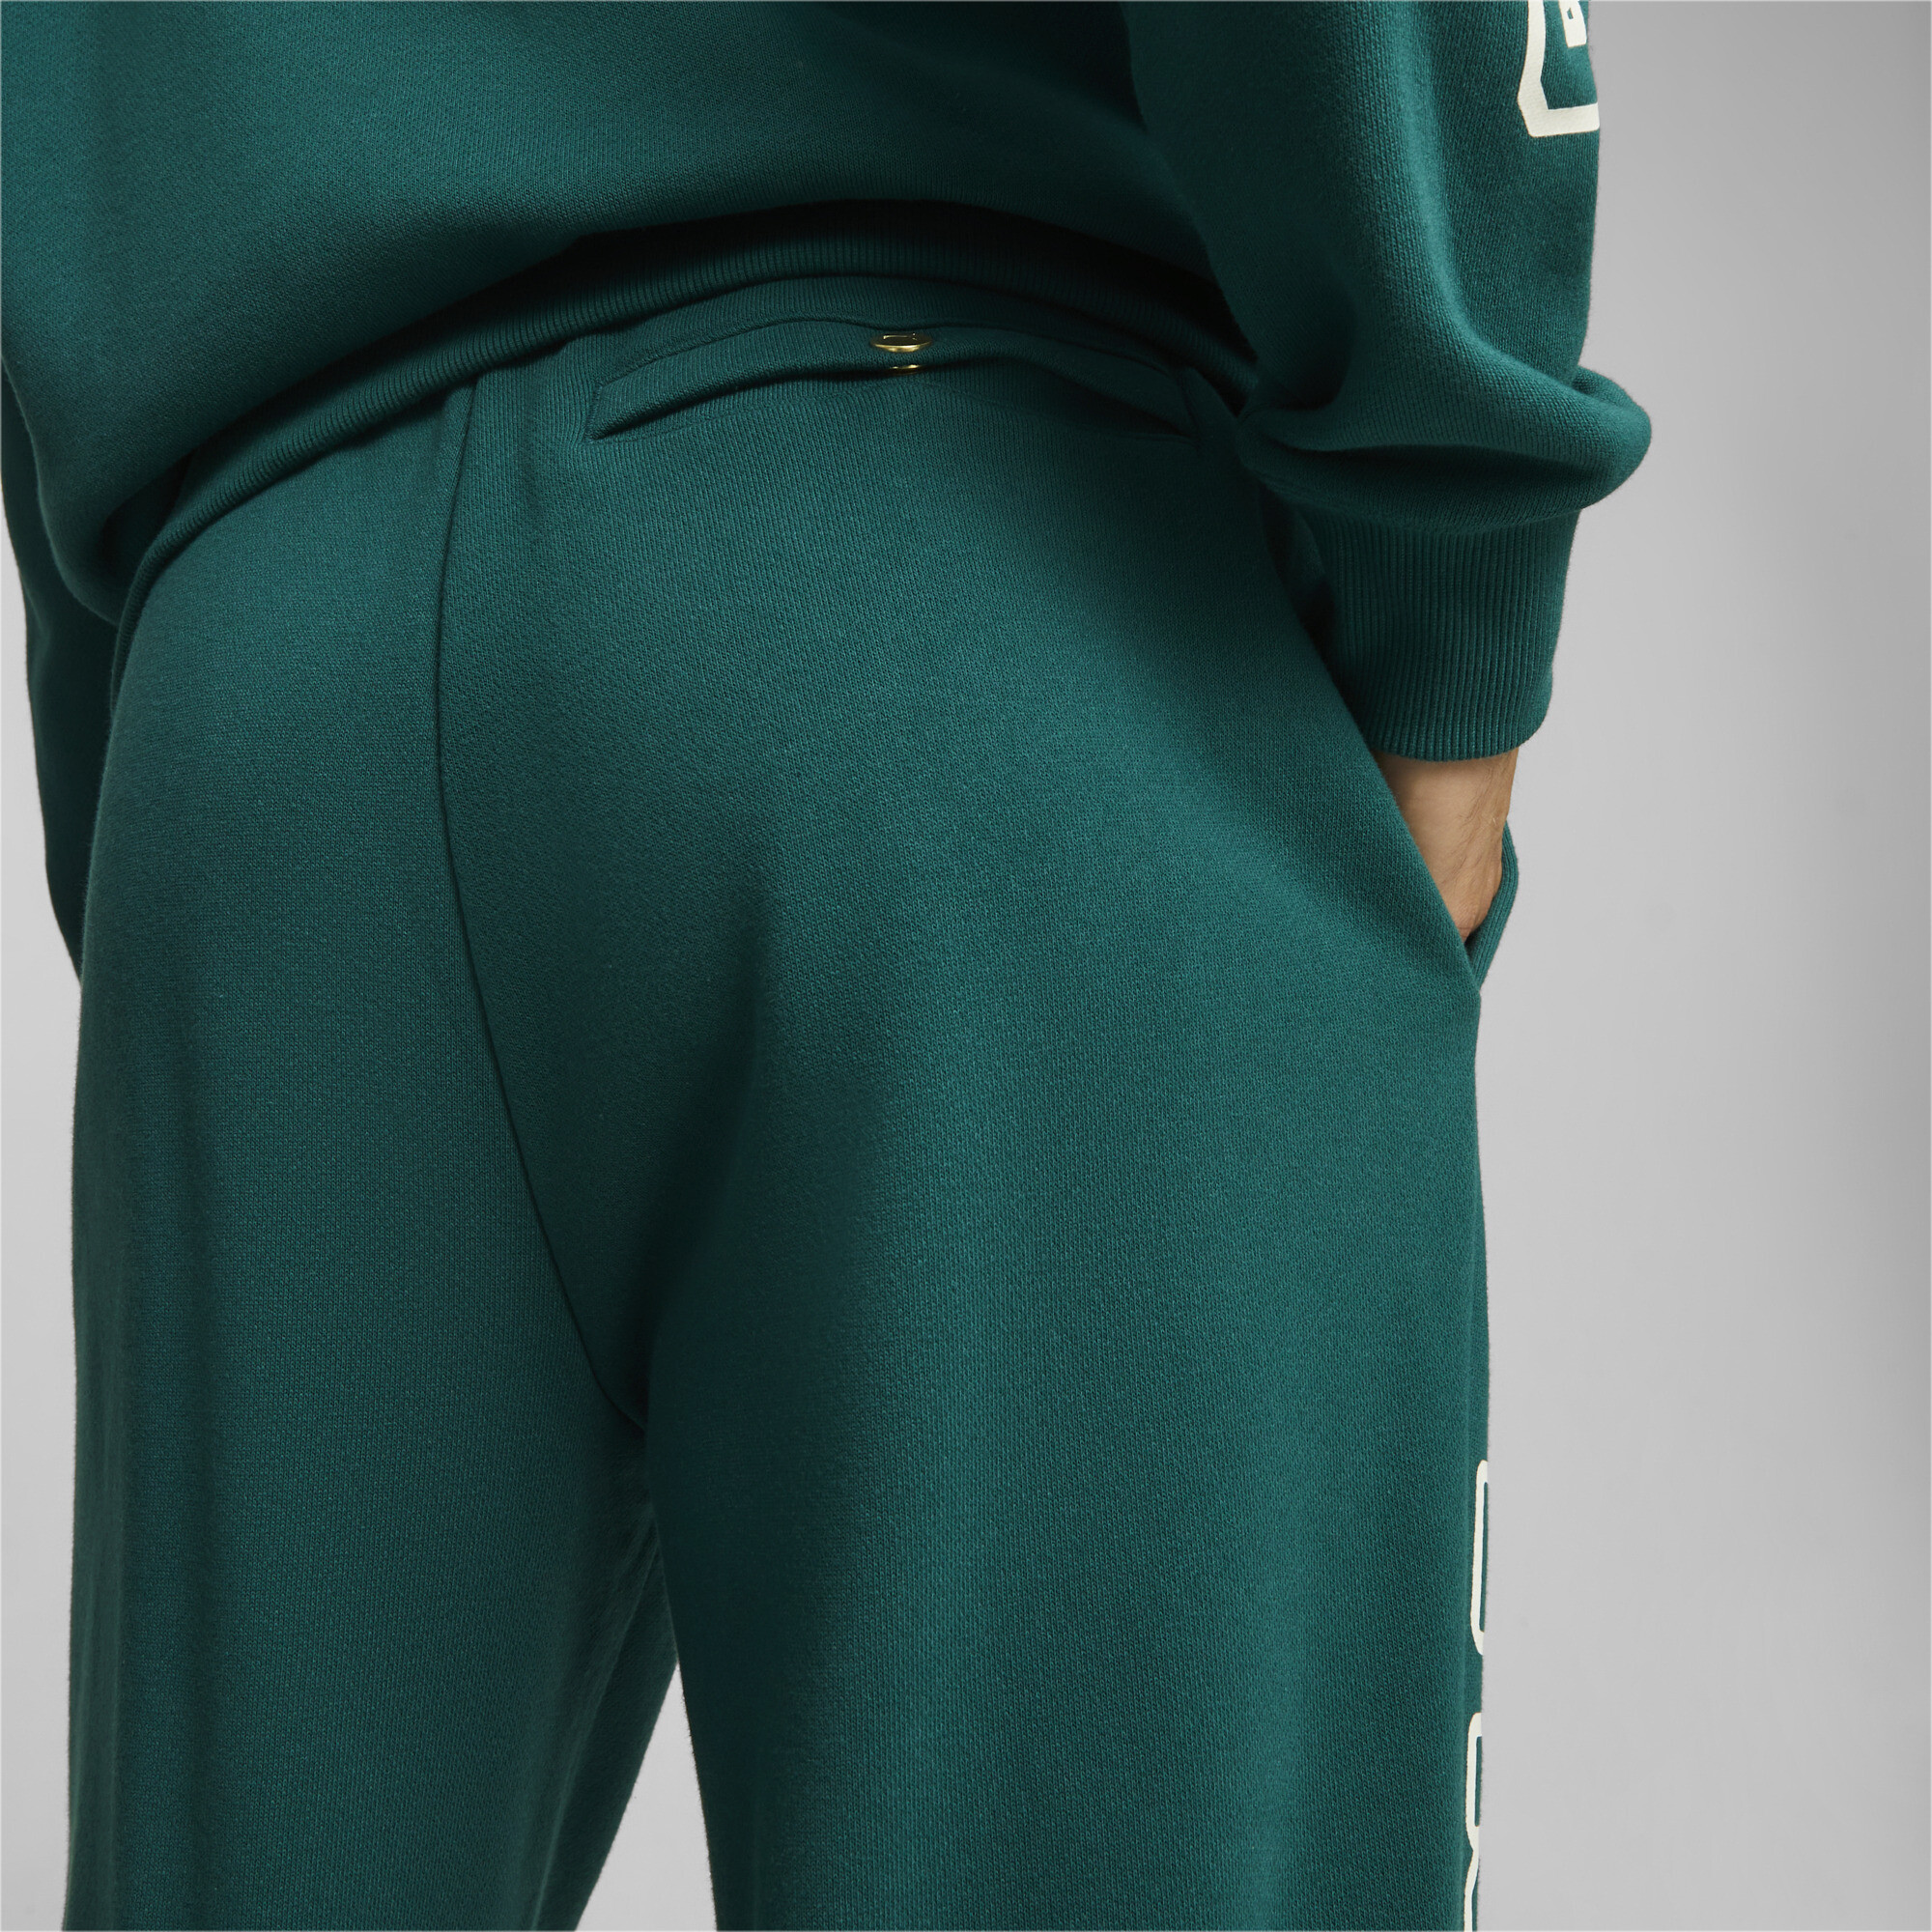 Men's Puma X STAPLE's Sweatpants, Green, Size L, Clothing